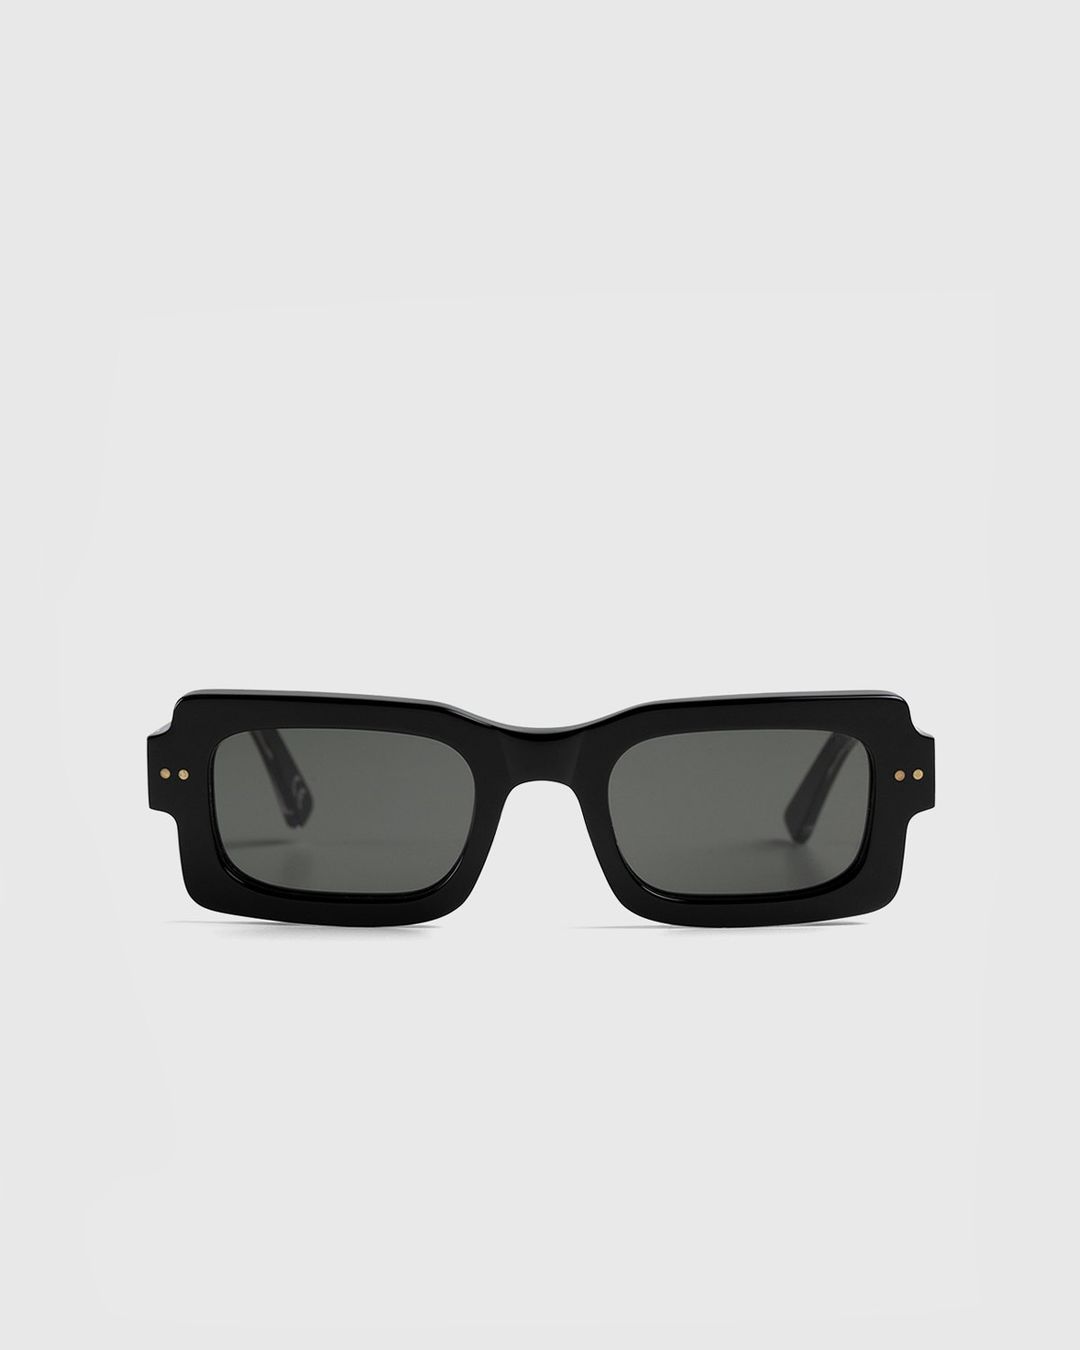 Marni – Lake Vostok Sunglasses Black | Highsnobiety Shop